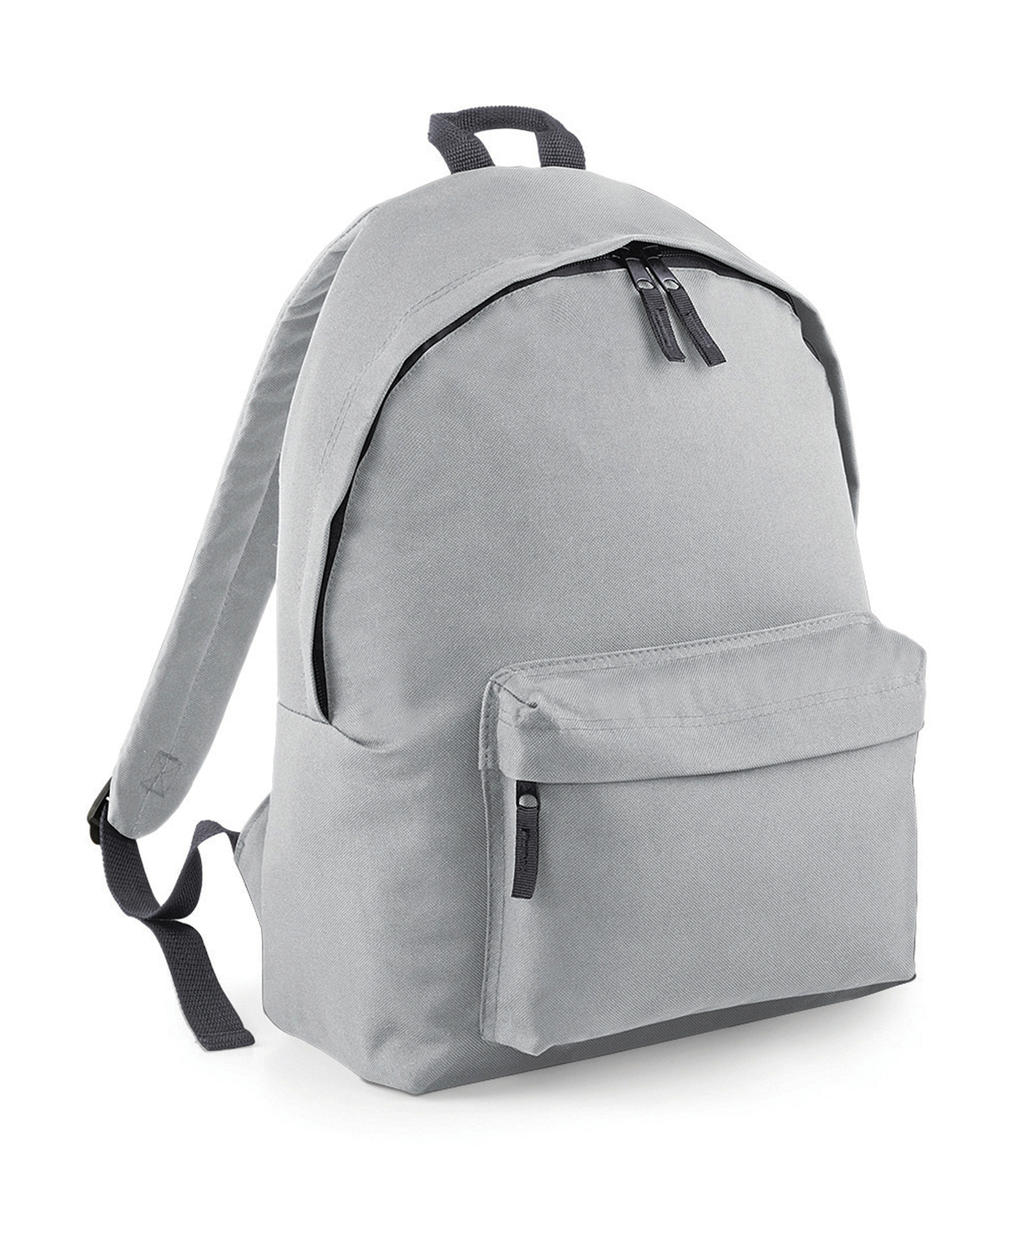  Original Fashion Backpack in Farbe Light Grey/Graphite Grey